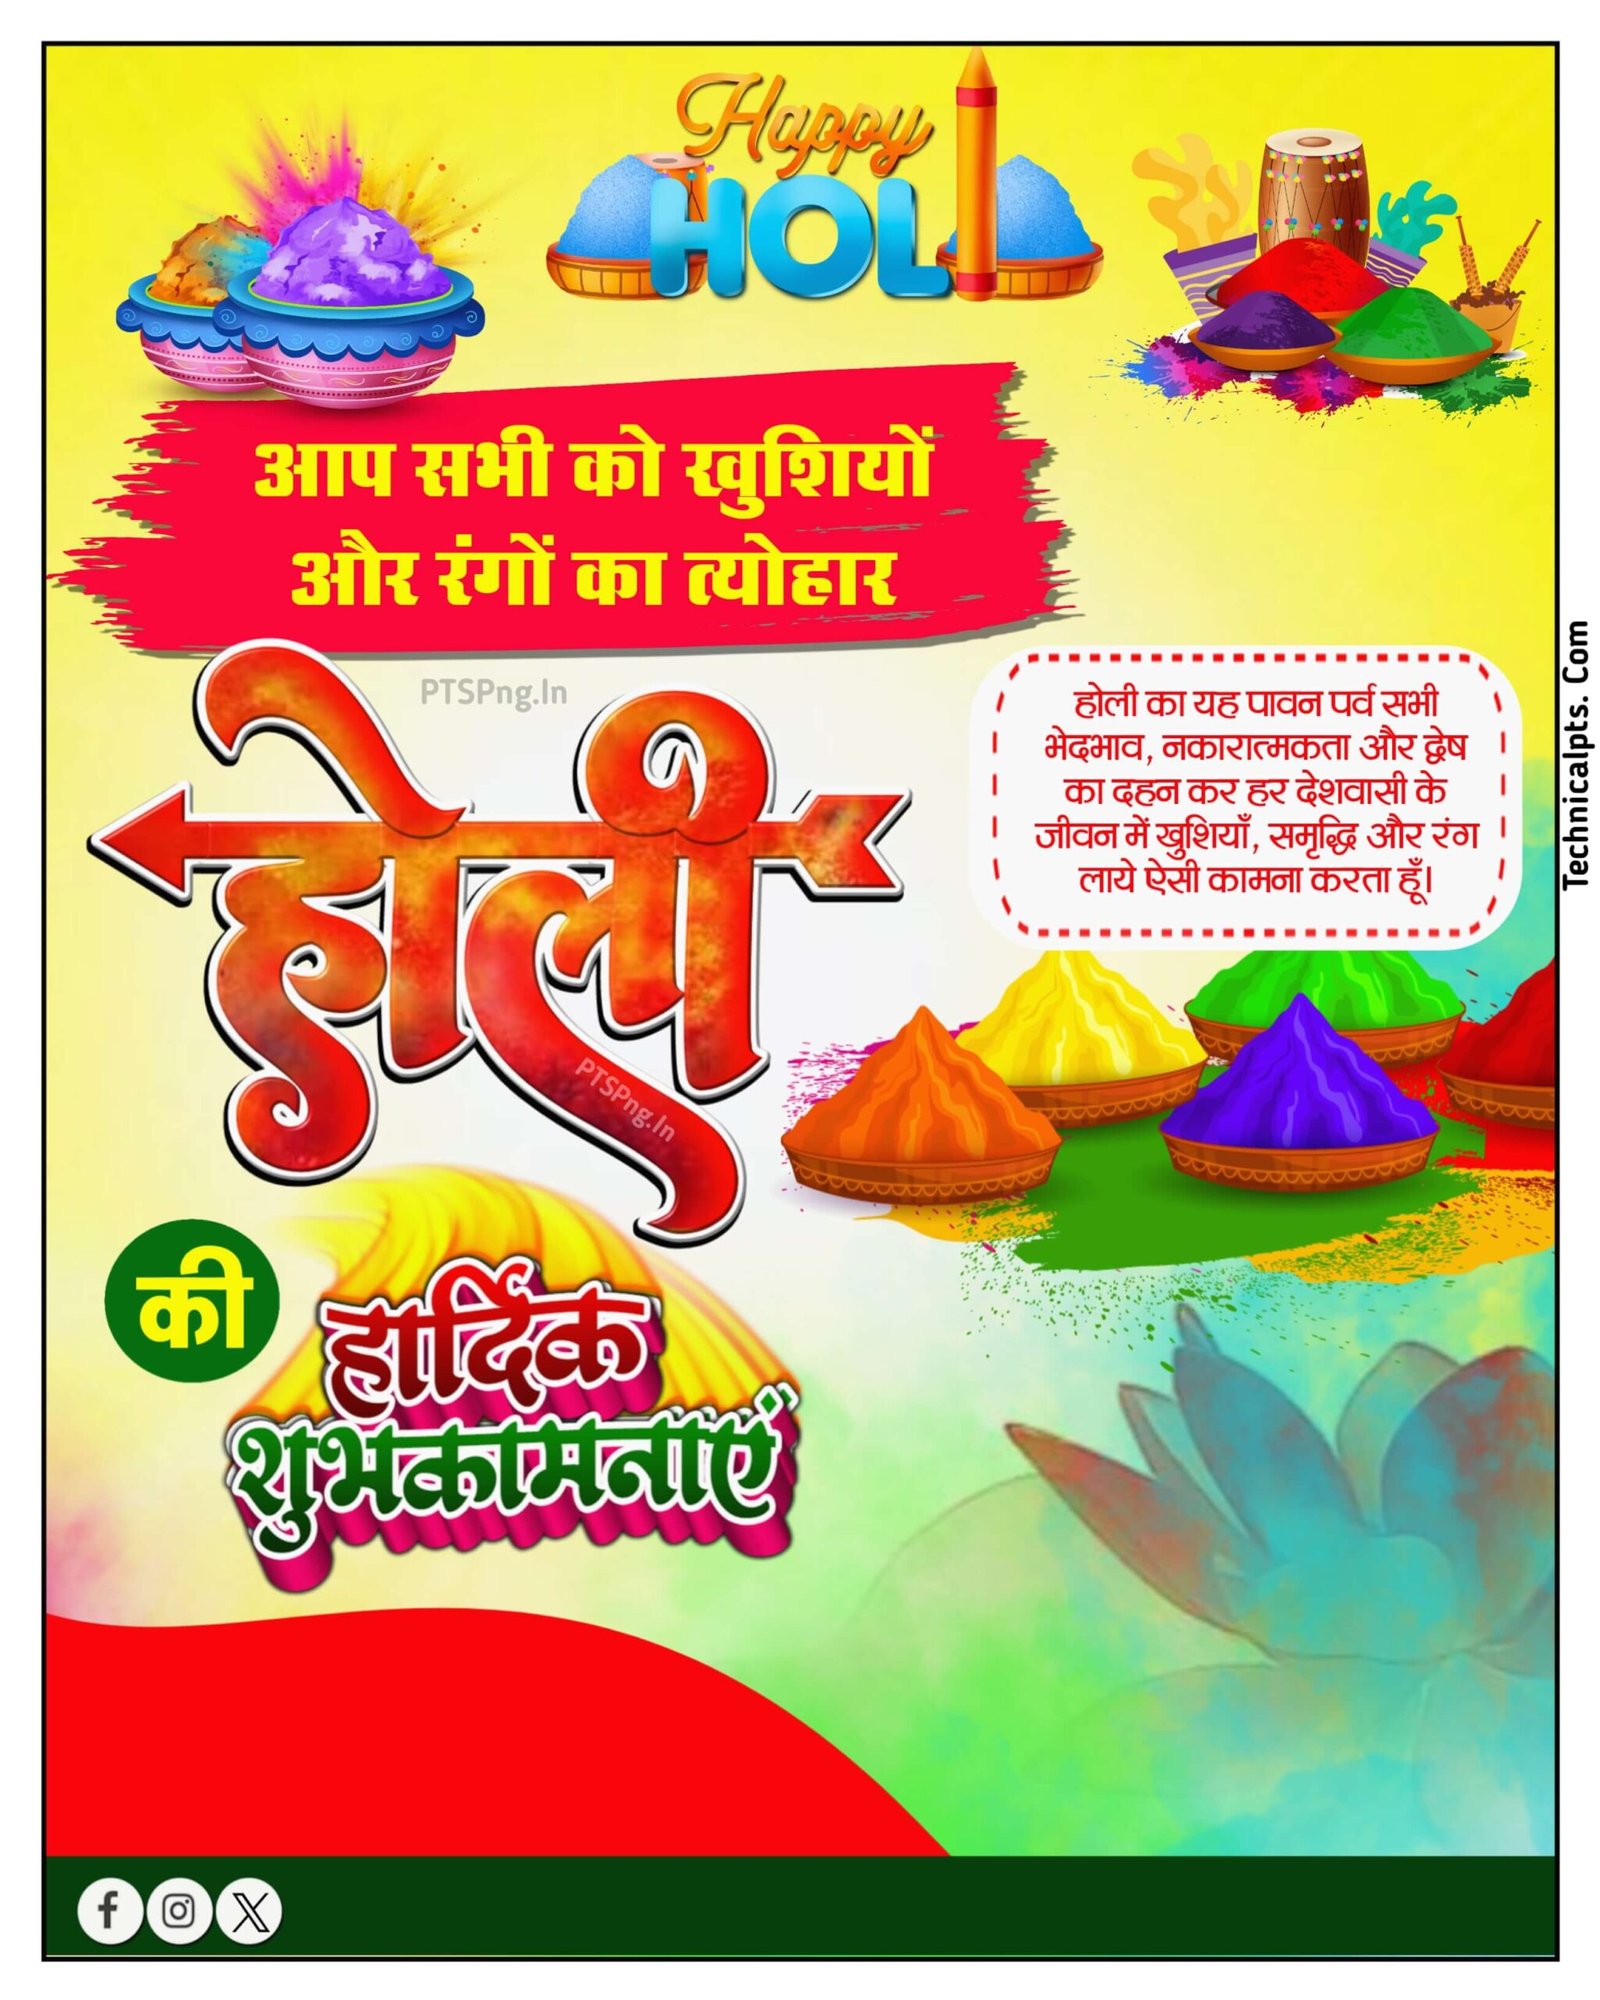 मोबाइल से होली का पोस्टर बनाना सीखें| create holi poster in mobile| Happy Holi banner editing PNG background download